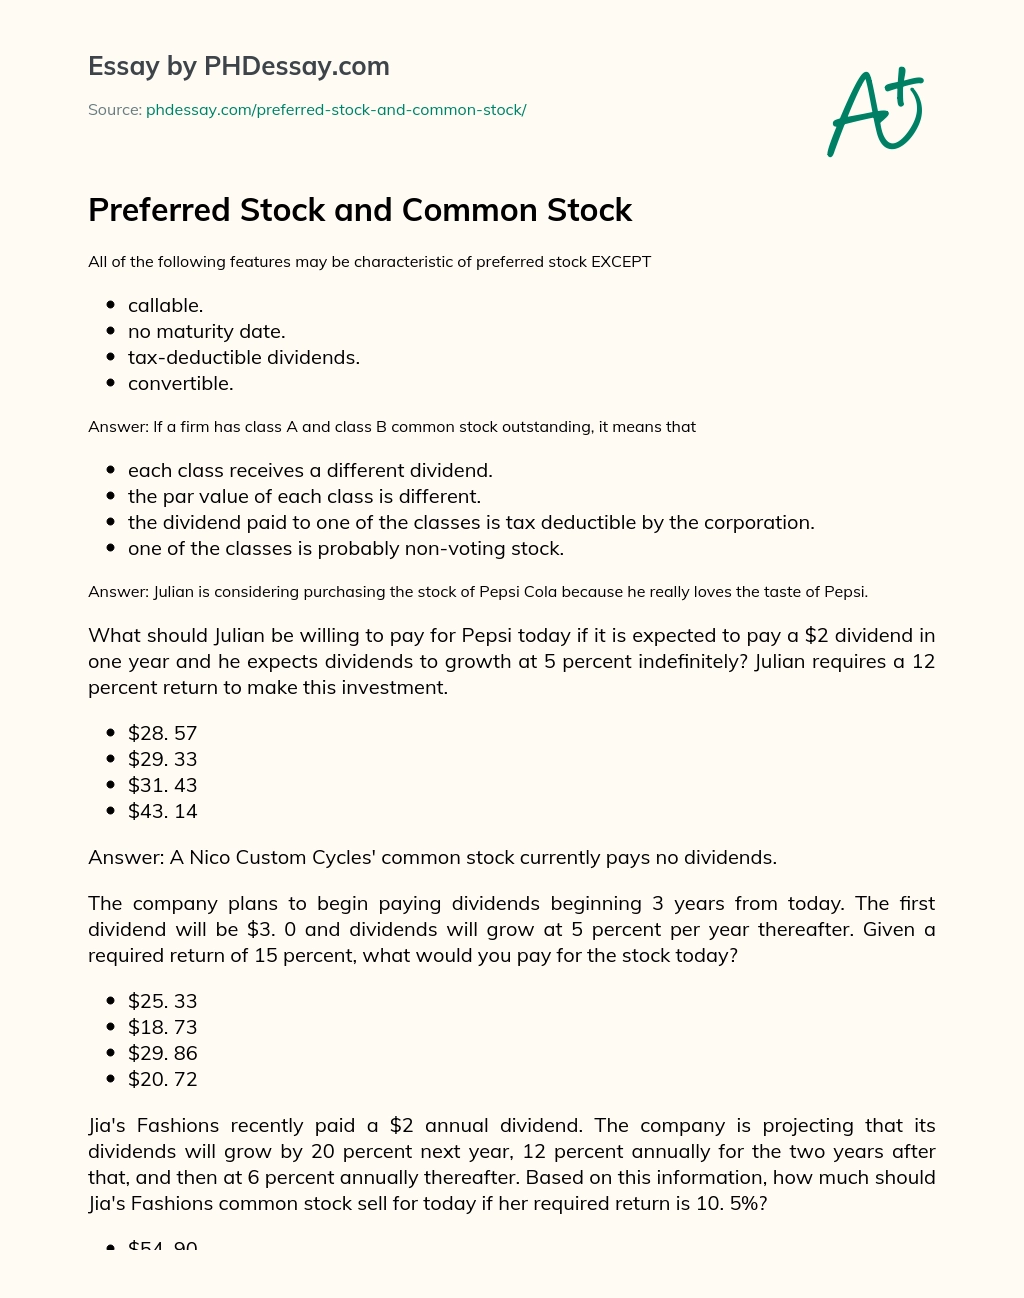 Preferred Stock and Common Stock essay